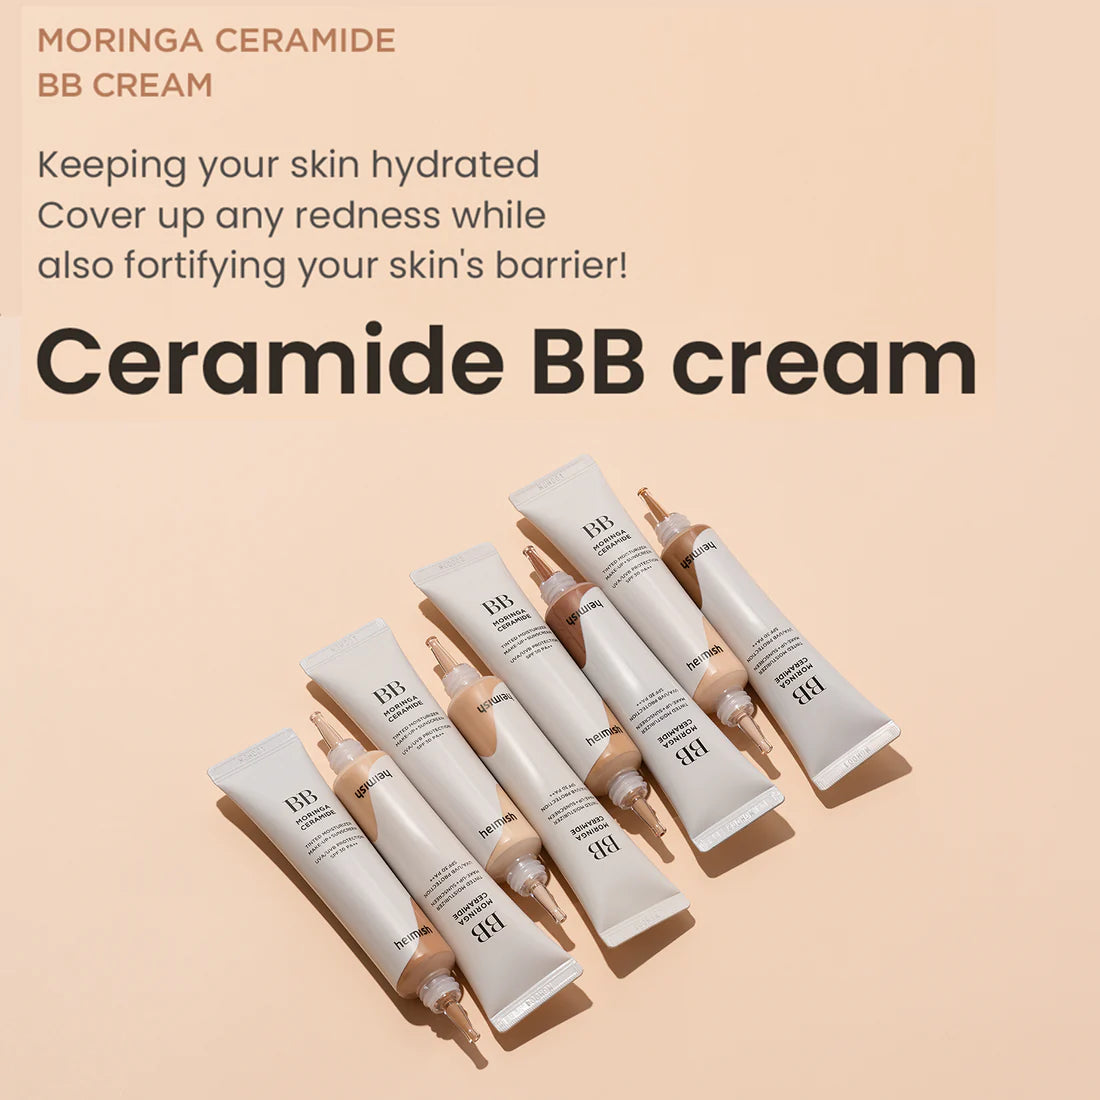 heimish - Moringa Ceramide BB Cream SPF 30 PA++ 19 Fair Beige - بيبي كريم فير بيج من هيمش